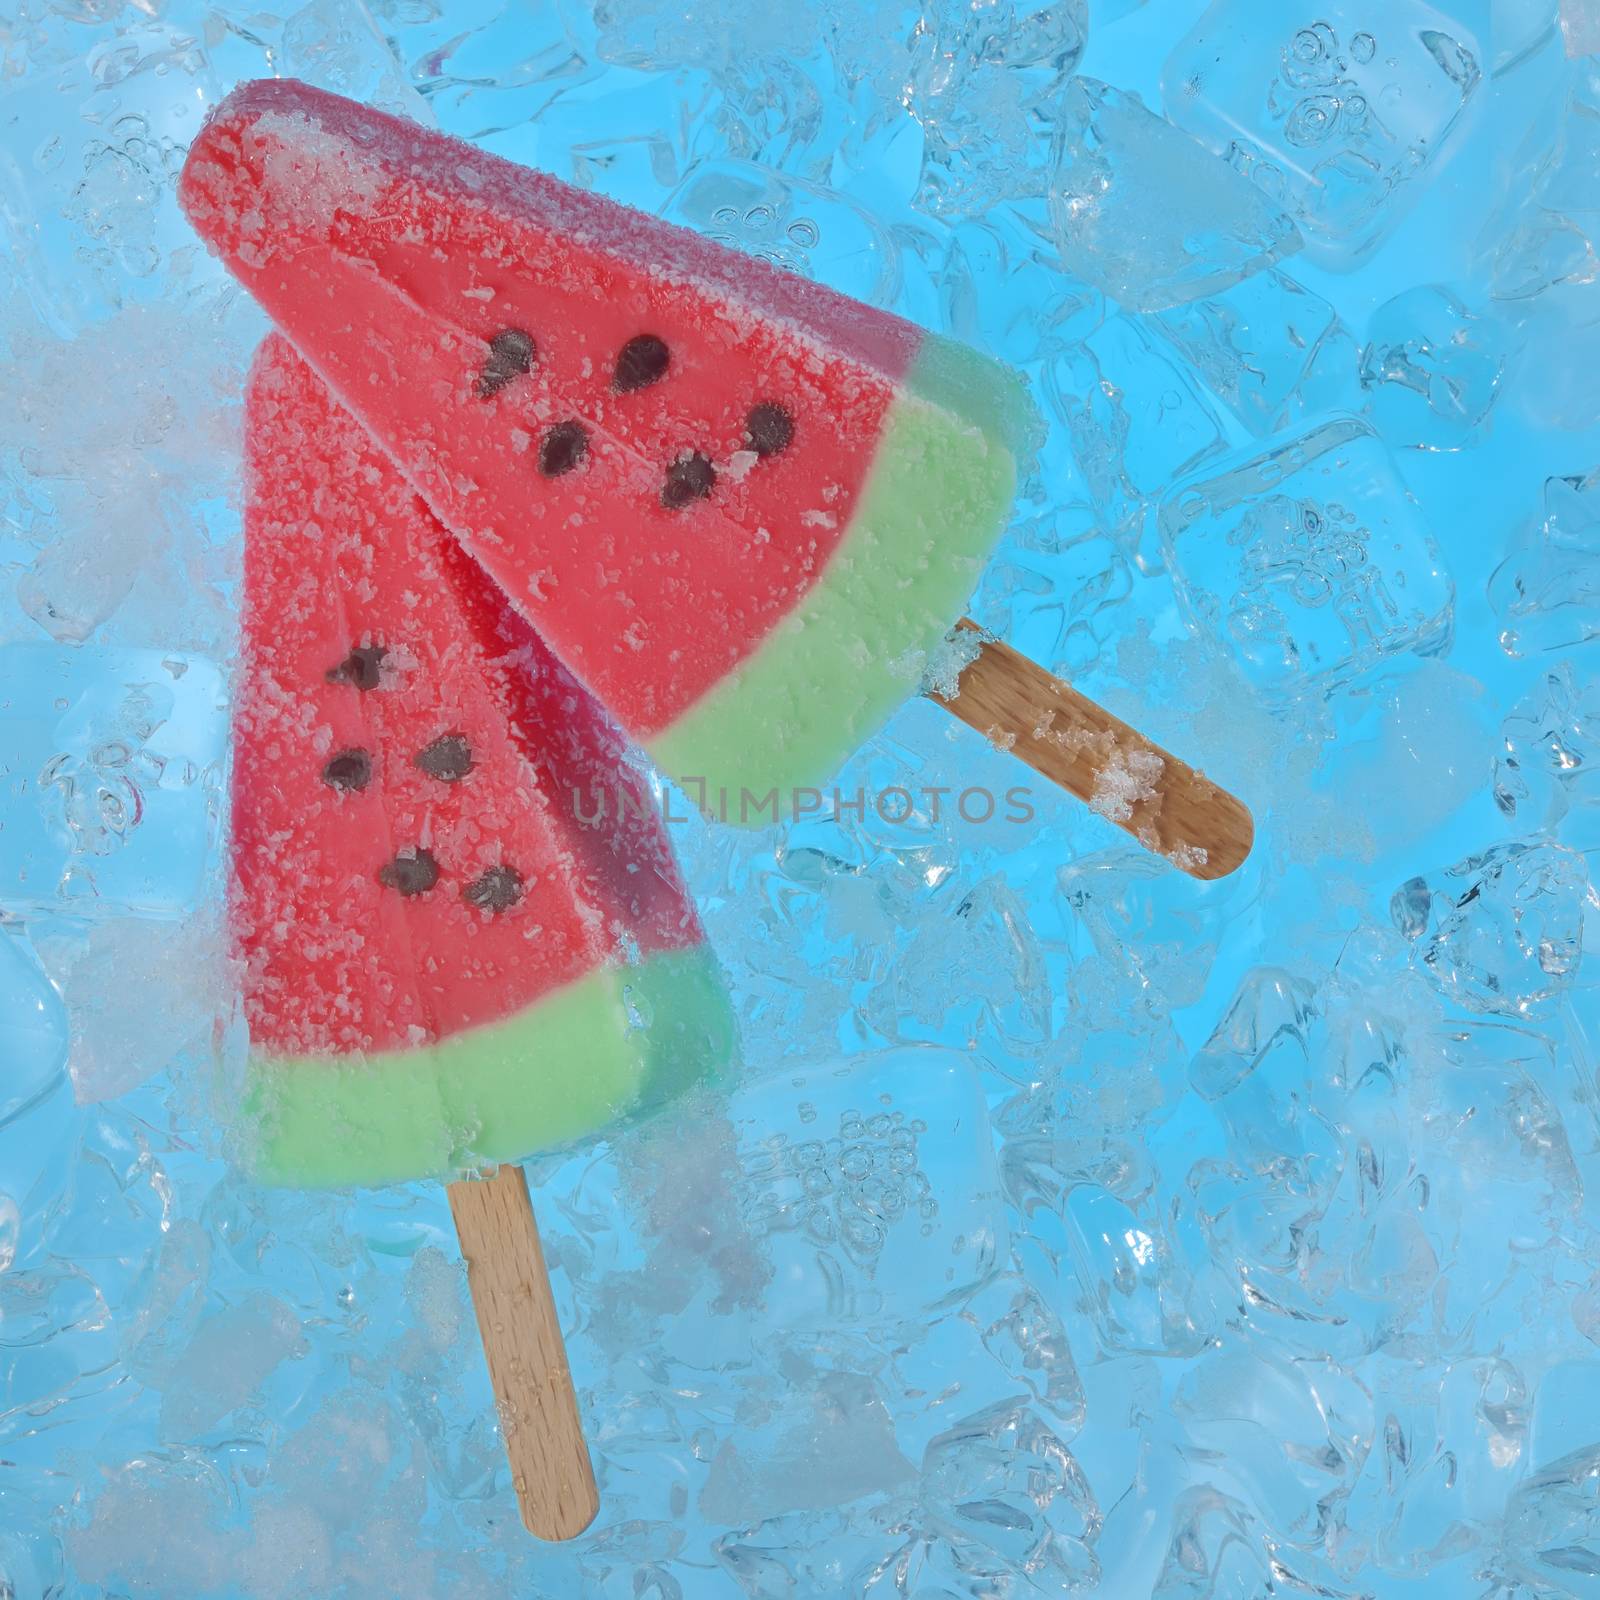 watermelon ice creams on ice